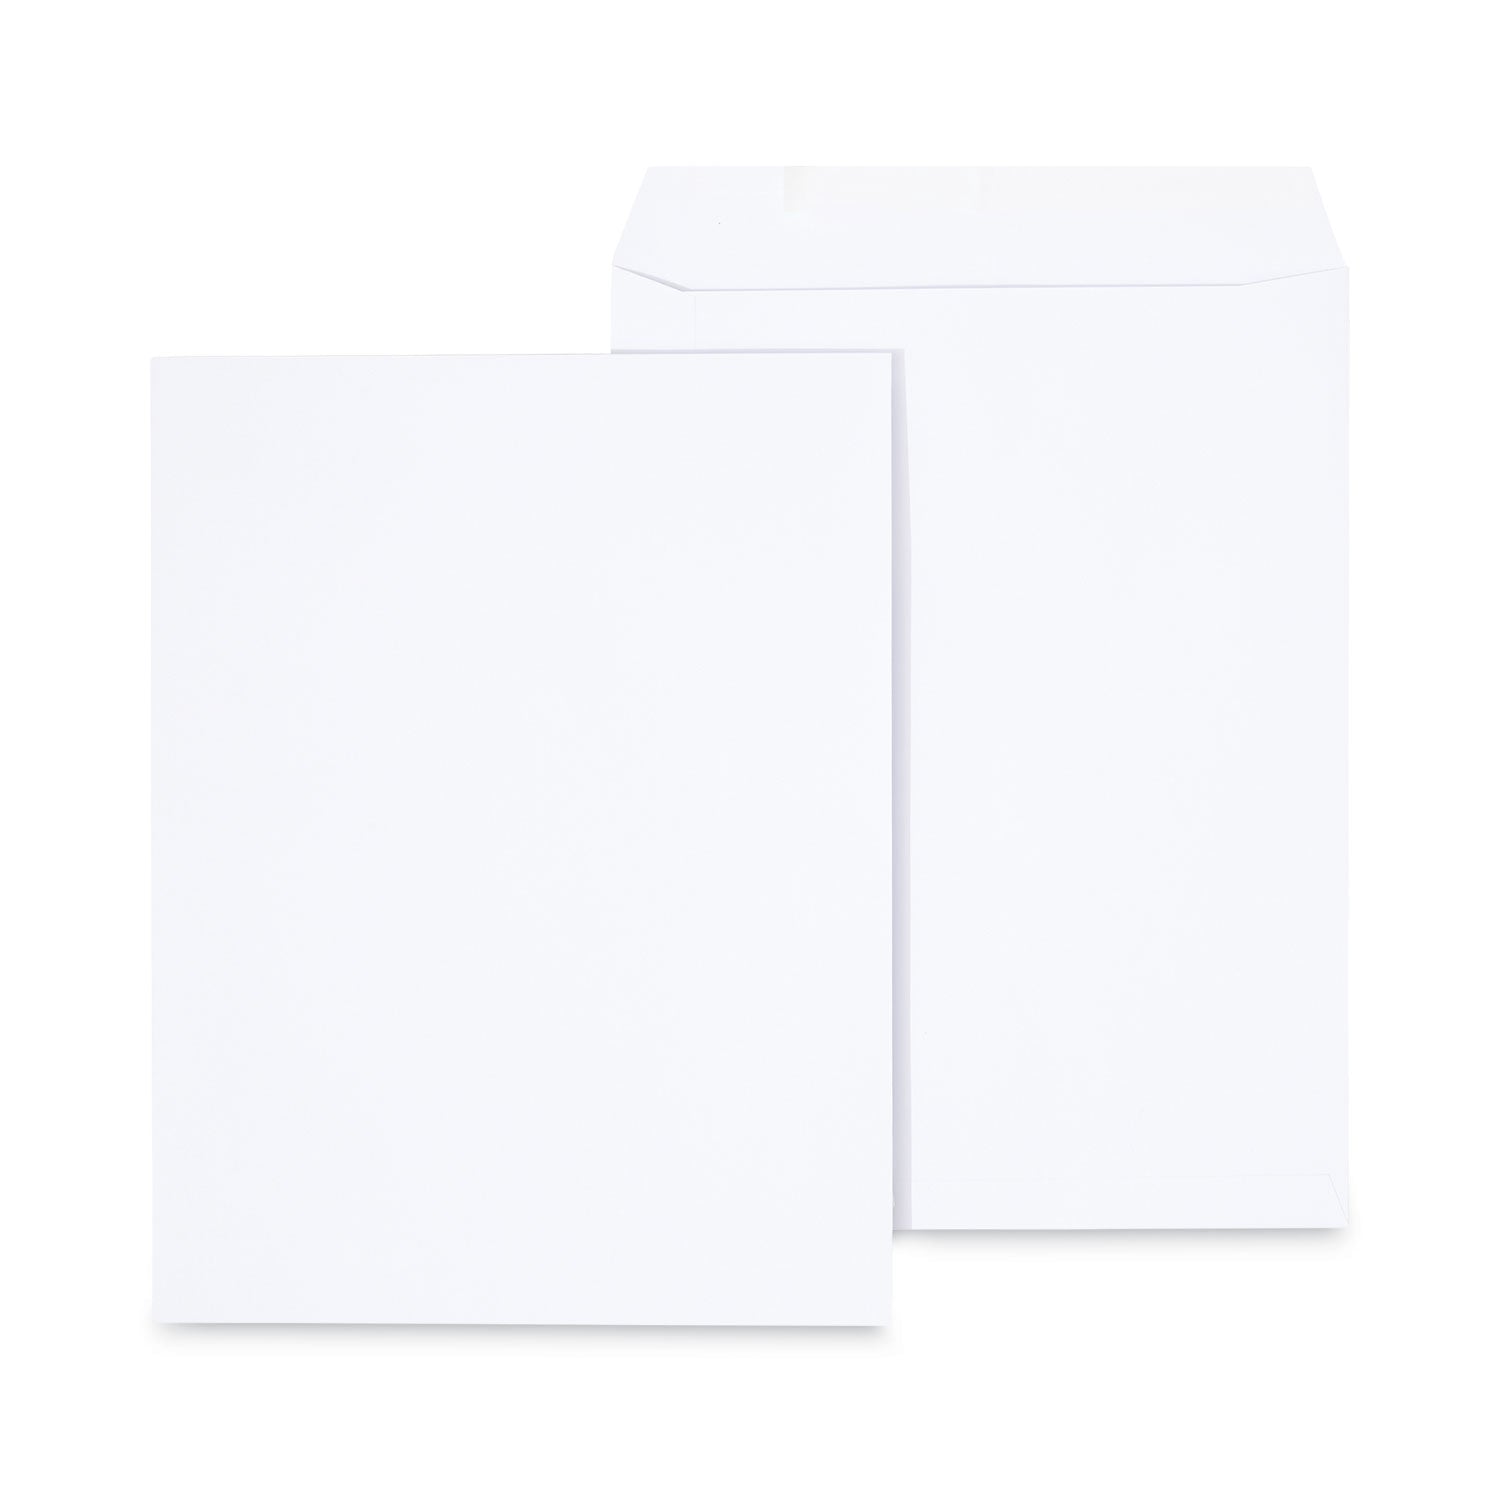 Peel Seal Strip Catalog Envelope, #13 1/2, Square Flap, Self-Adhesive Closure, 10 x 13, White, 100/Box - 